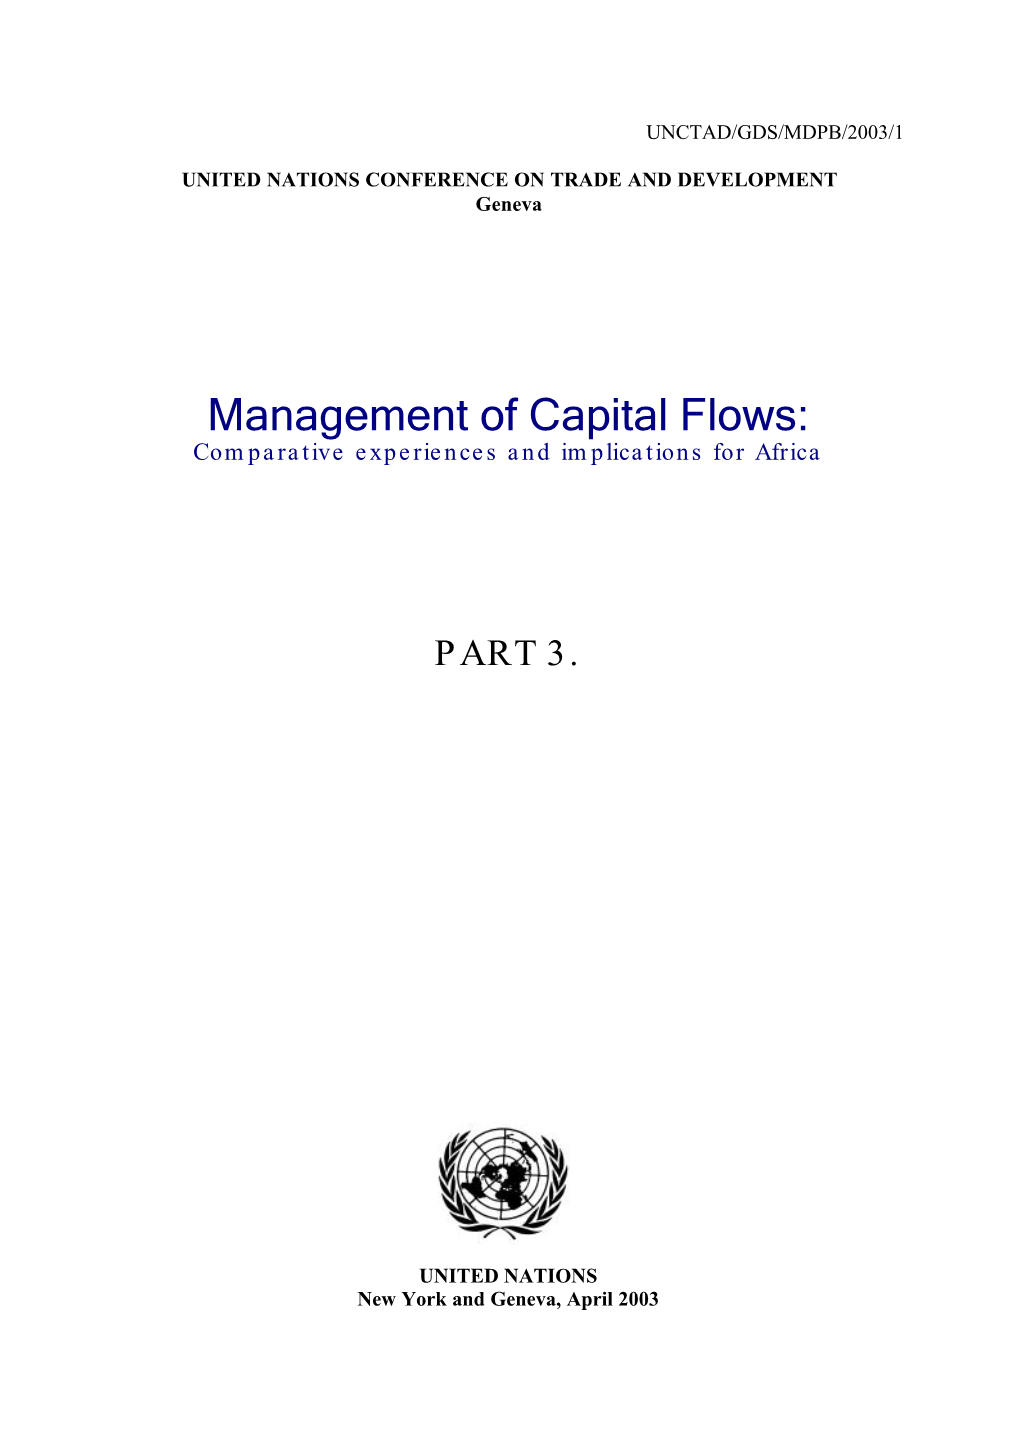 UNCTAD/GDS/MDPB/2003/1; Management of Capital Flows